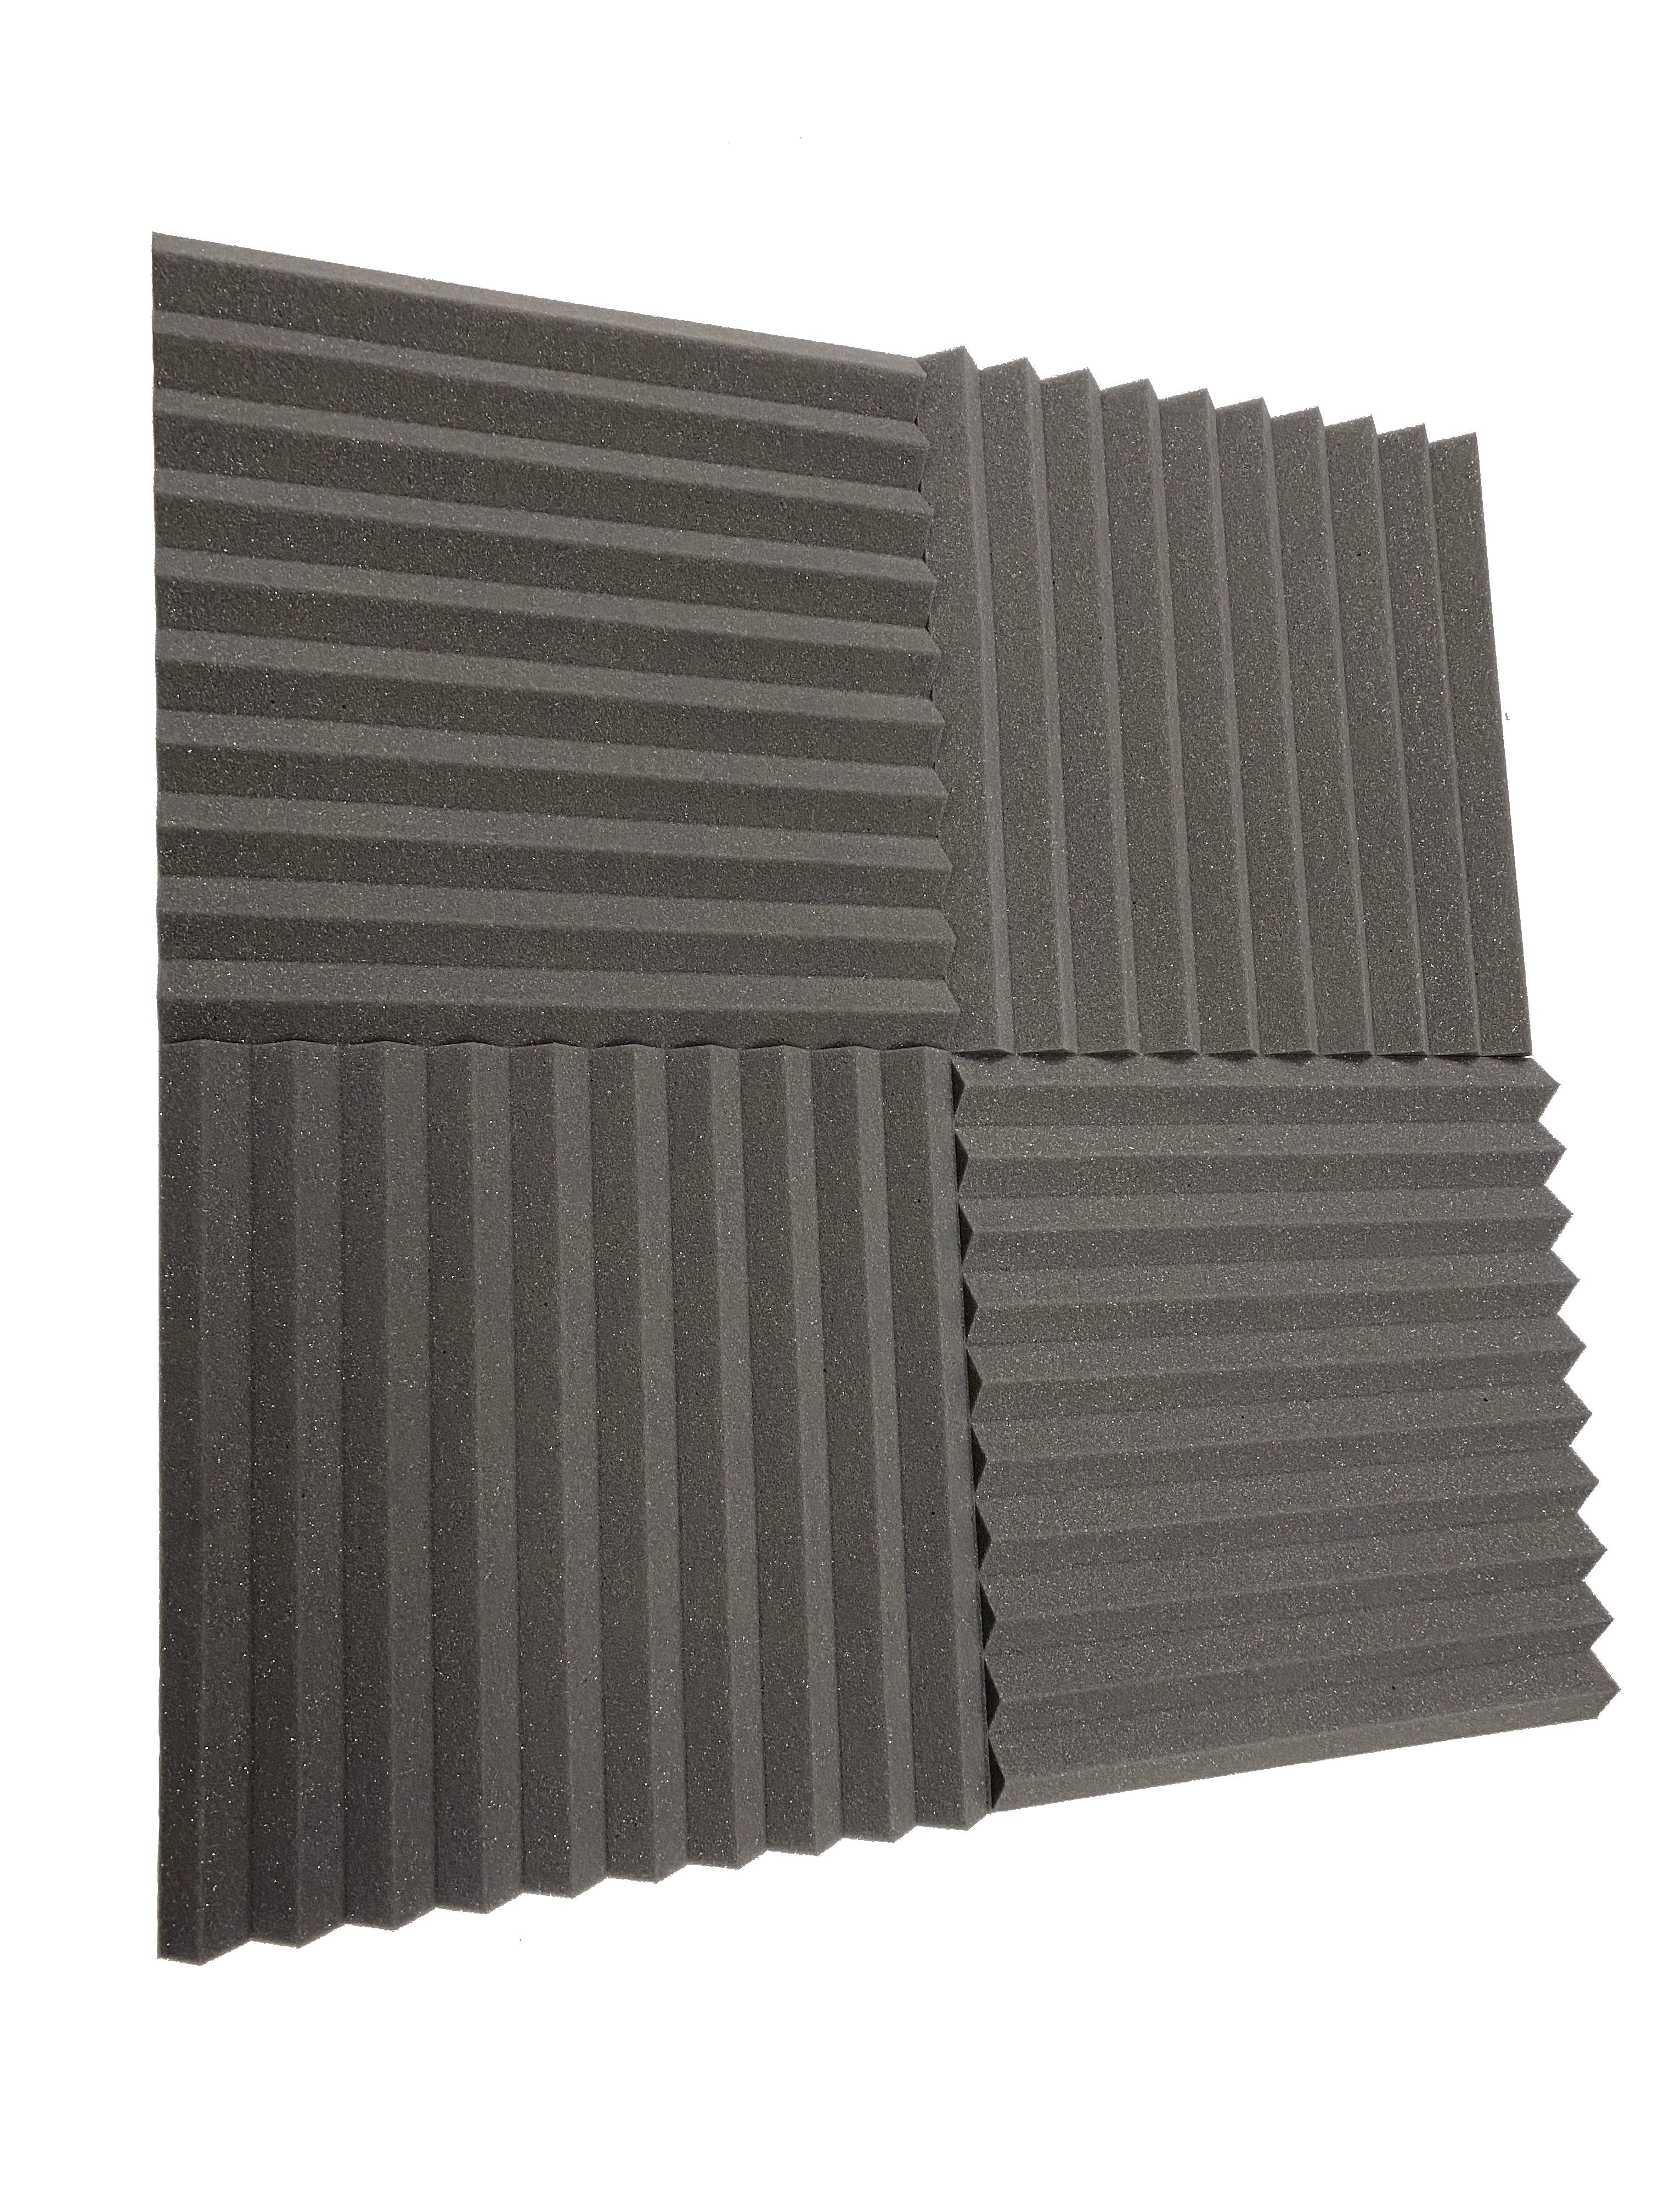 Kaufen mittelgrau Wedge 15&quot; Acoustic Studio Foam Tile Pack - 24 Tiles, 3.48sqm Coverage